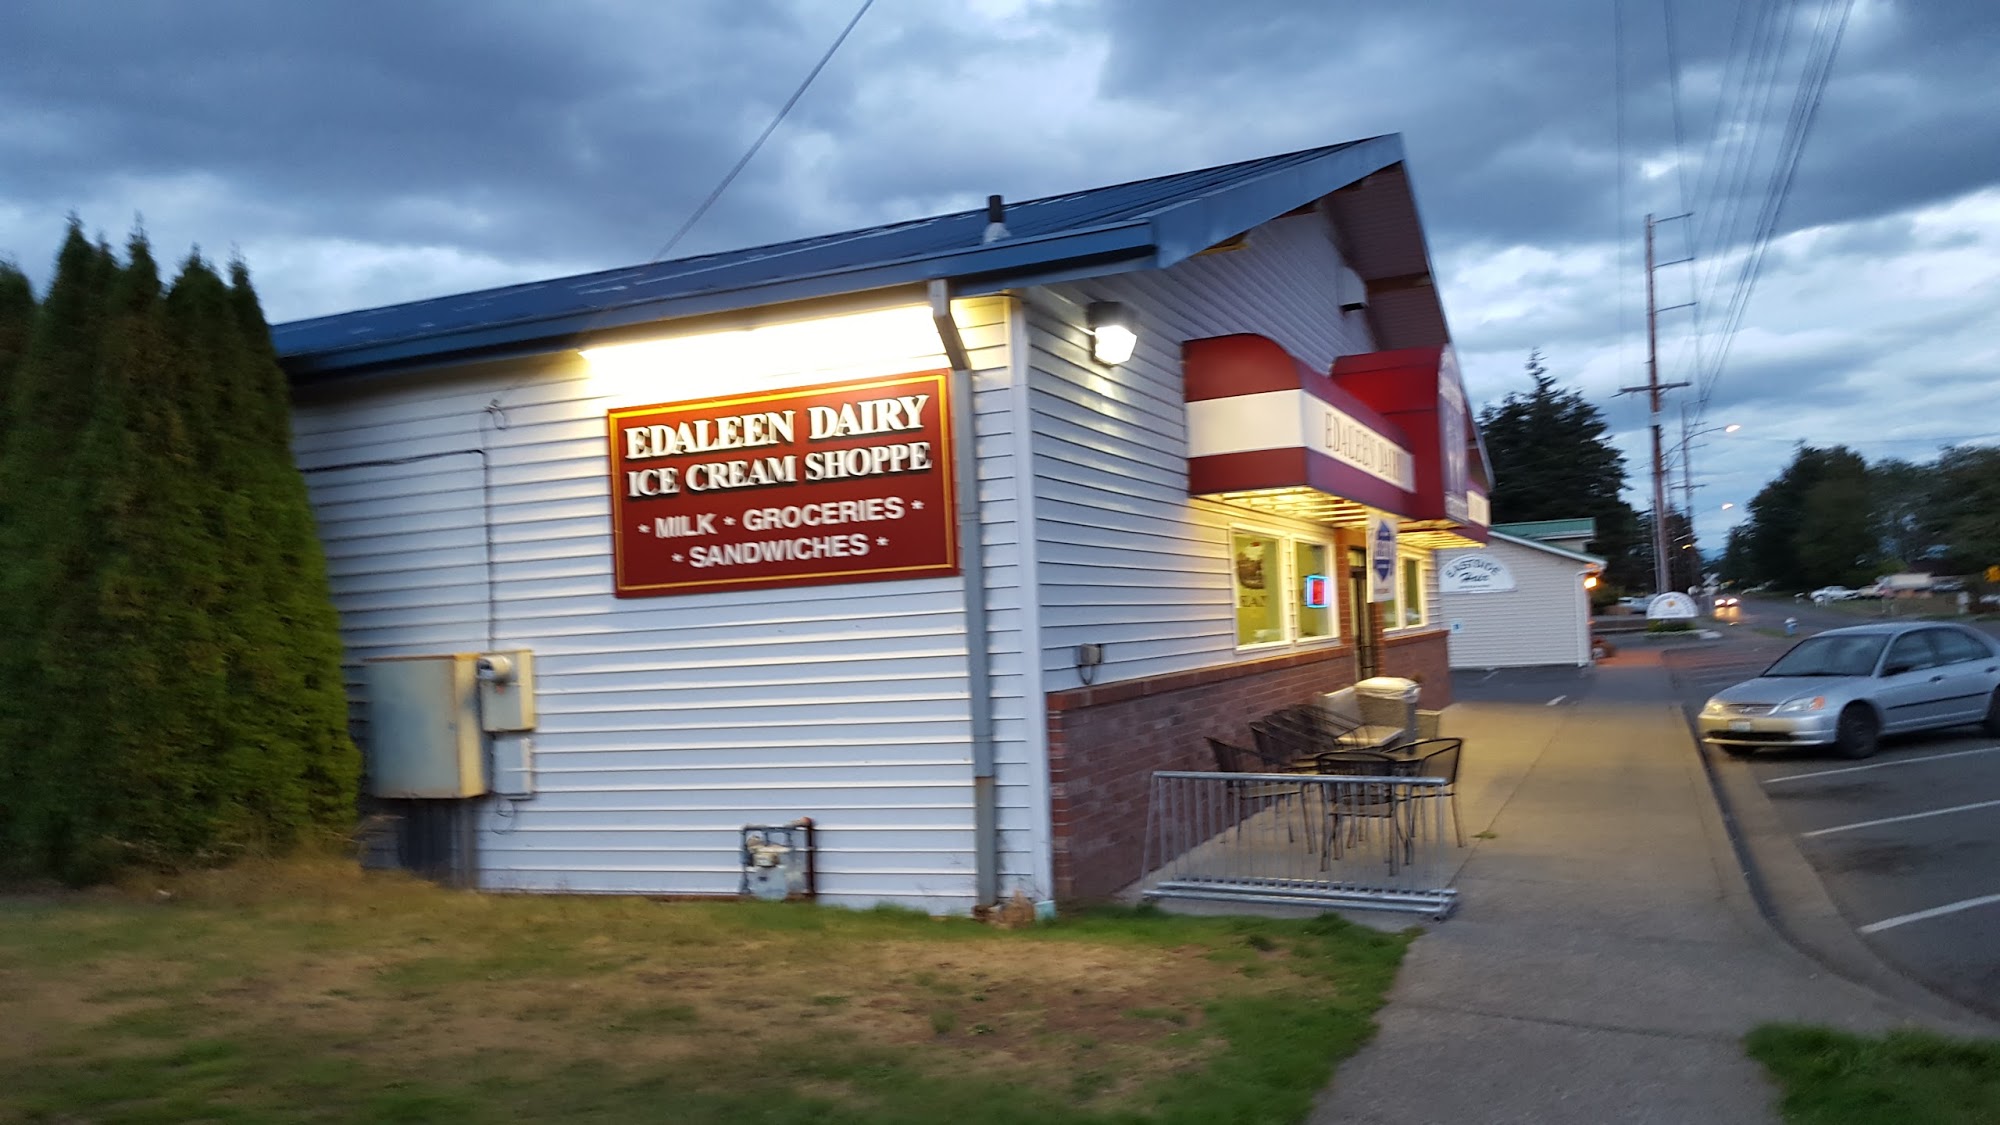 Edaleen Dairy Store